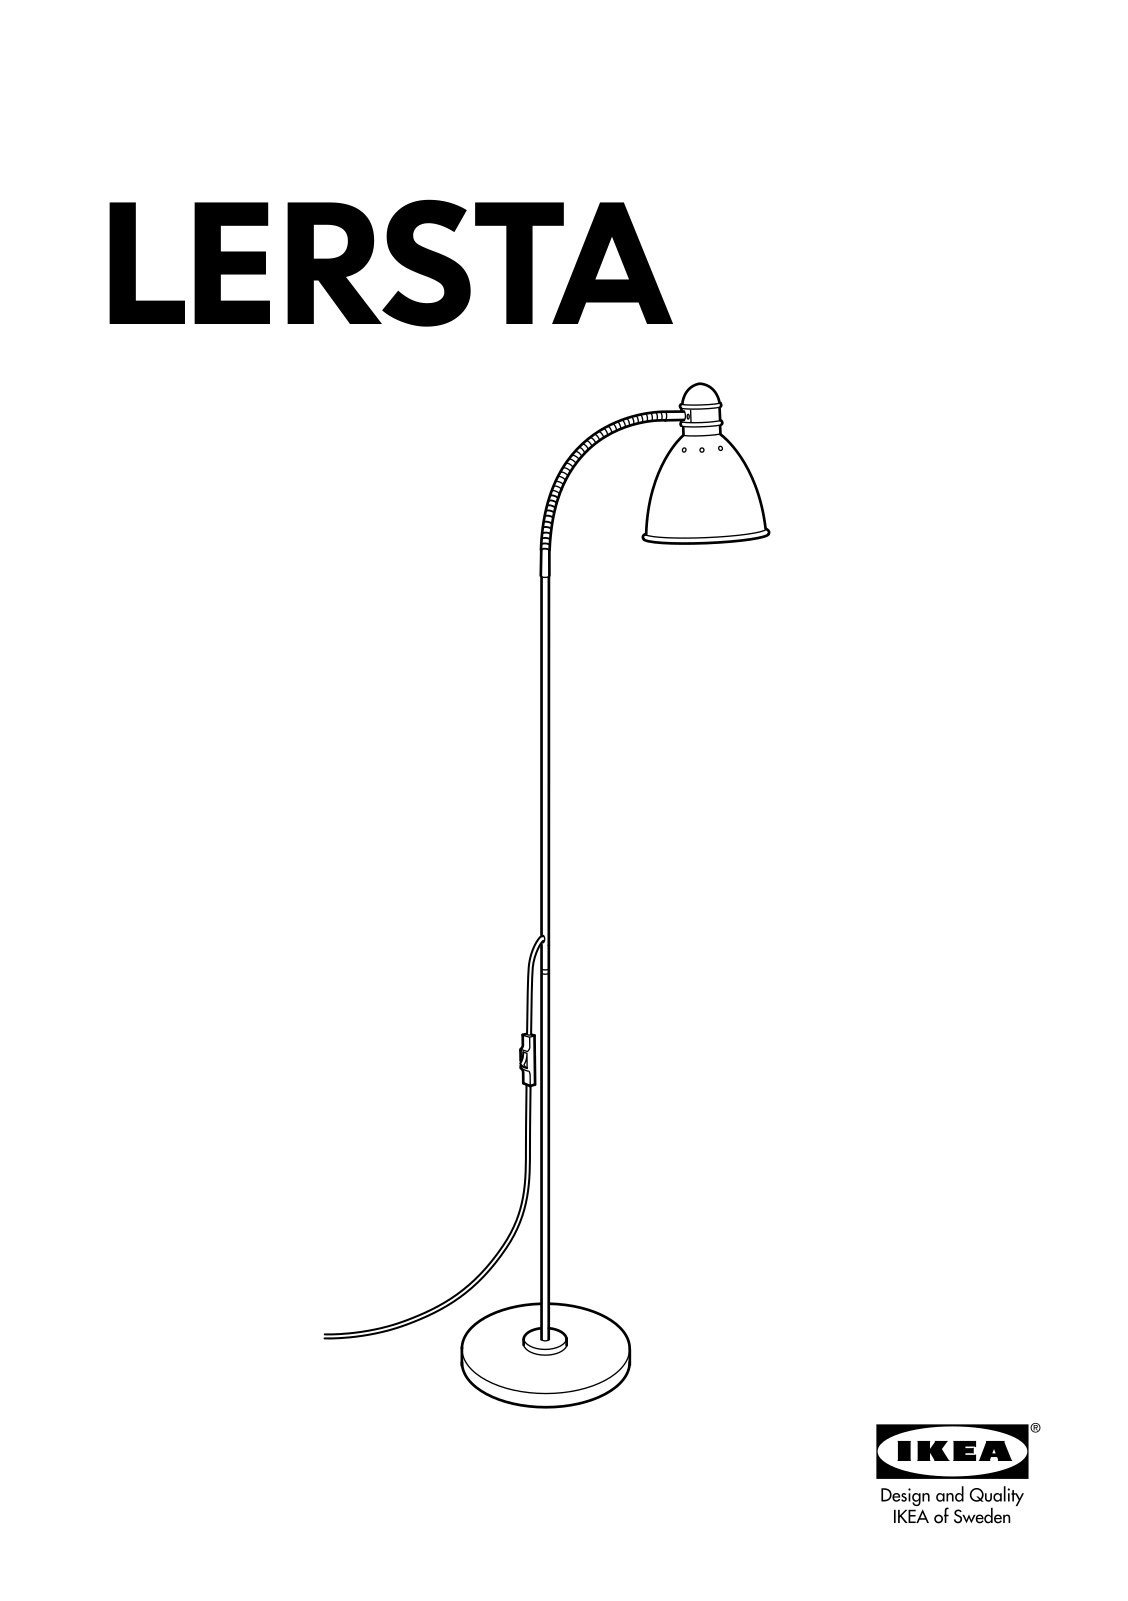 IKEA LERSTA User Manual